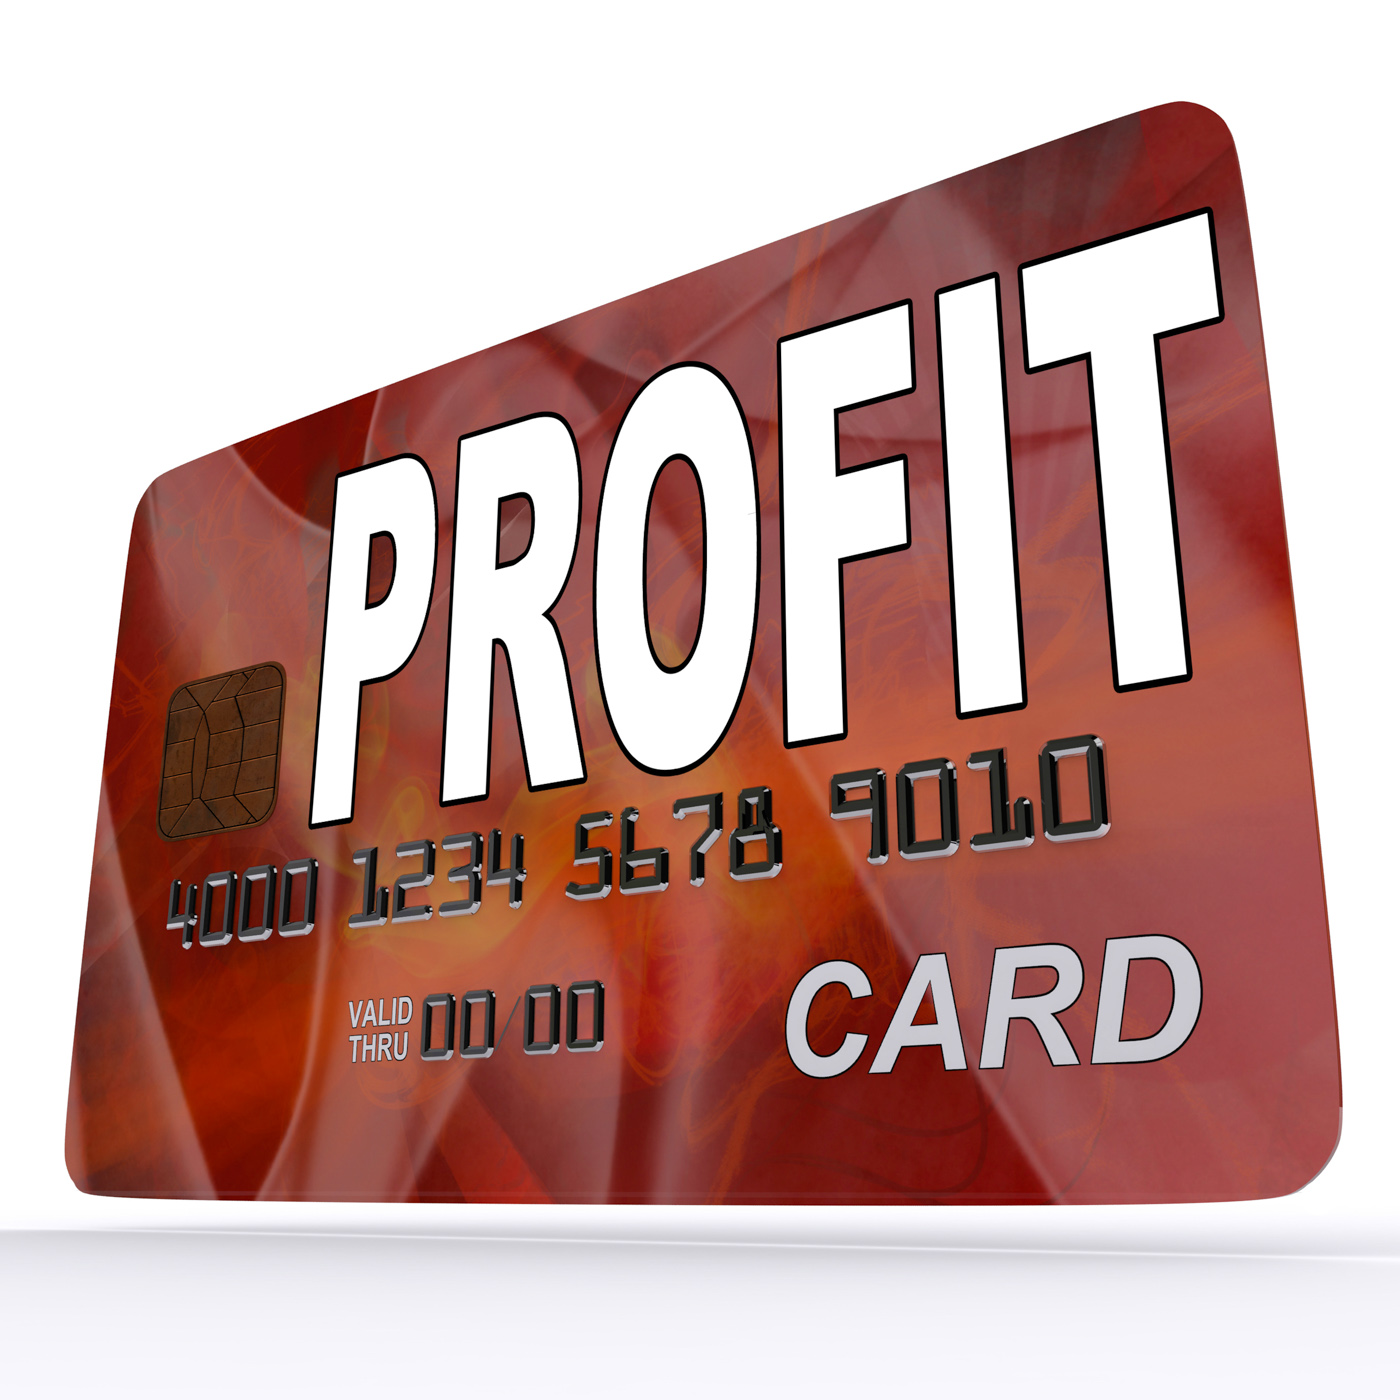 Profit on credit debit card shows earn money photo